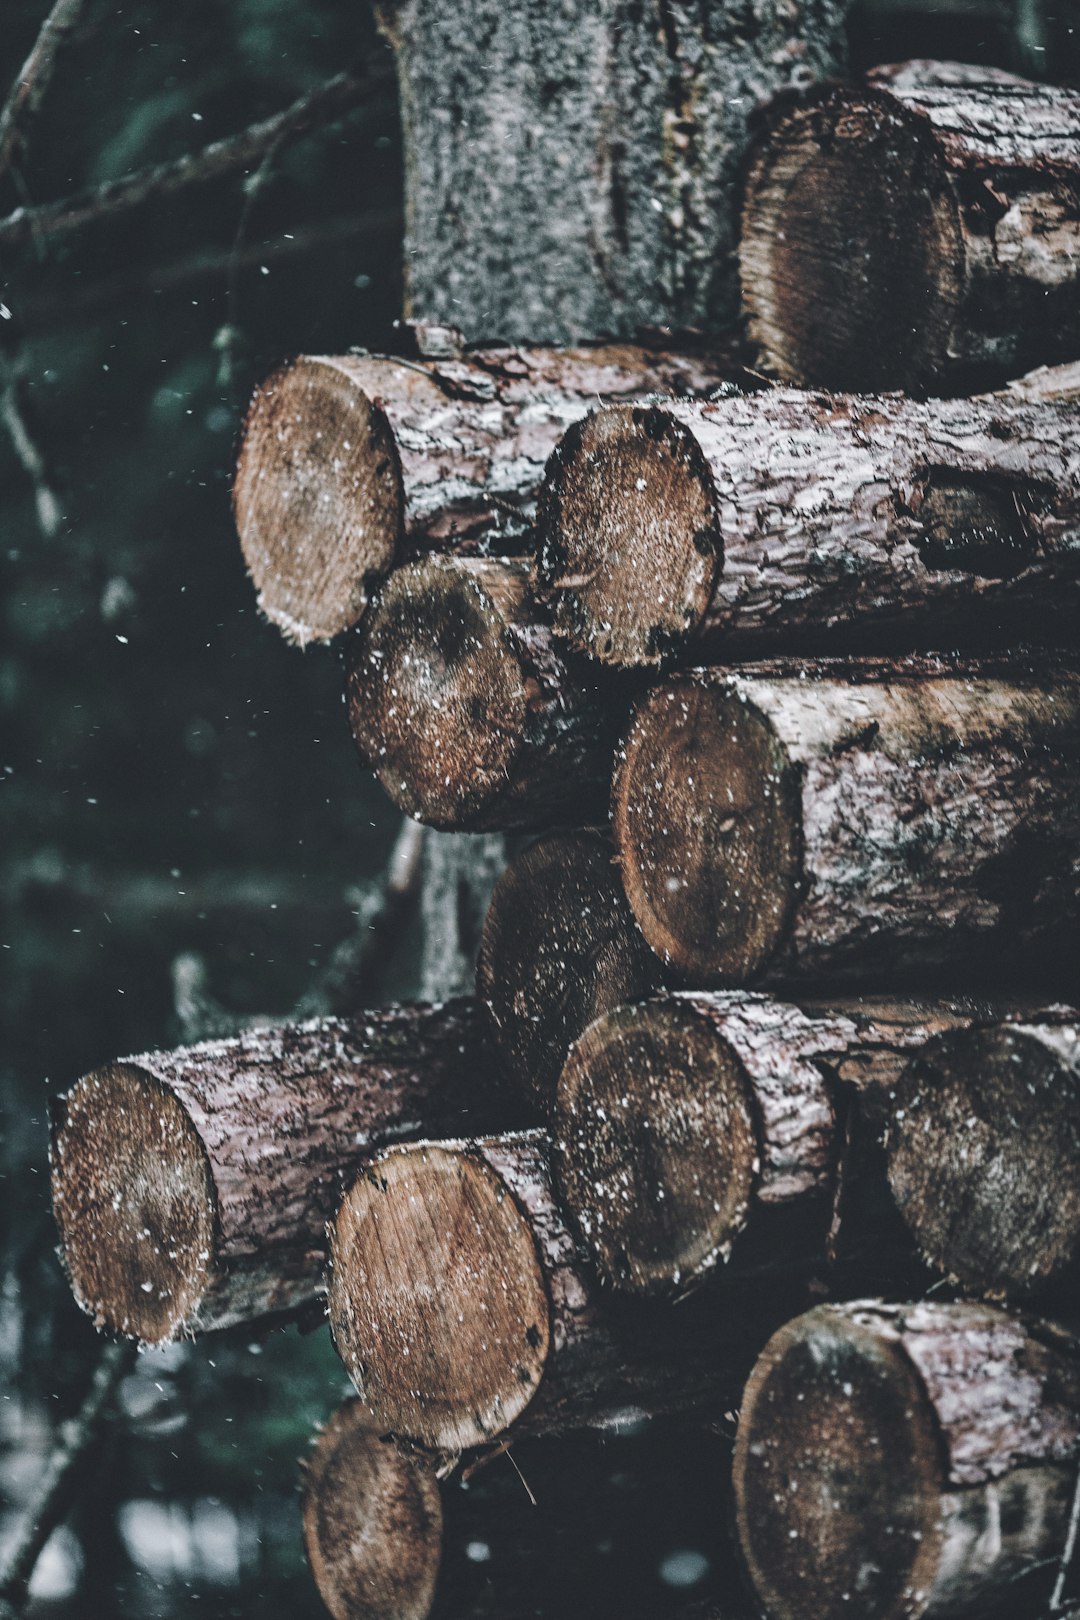 pile of wood logs